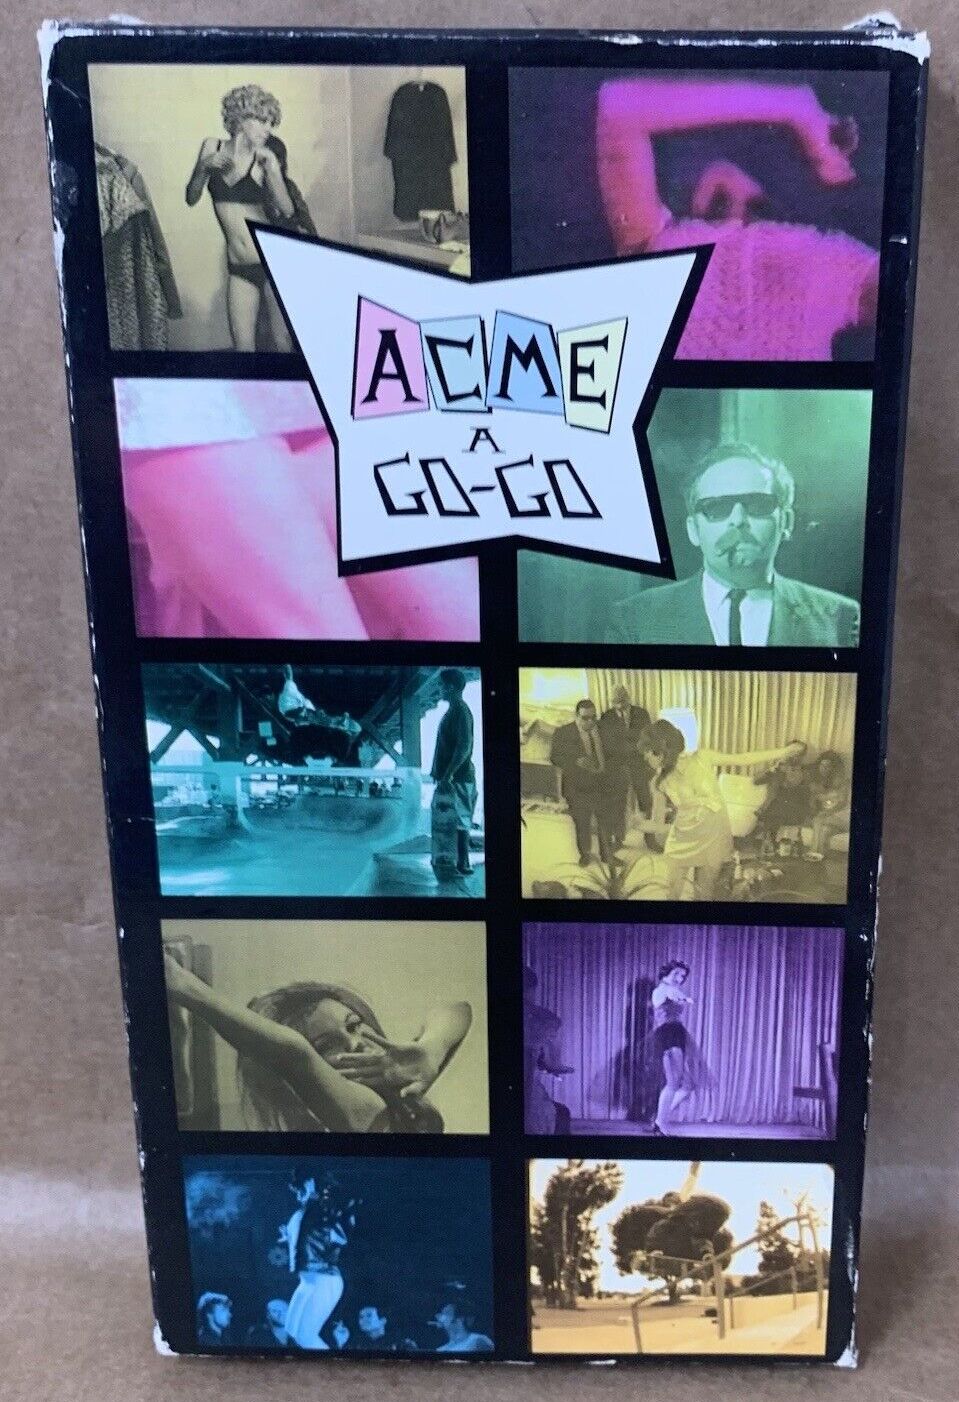 Acme - A Go-Go cover art